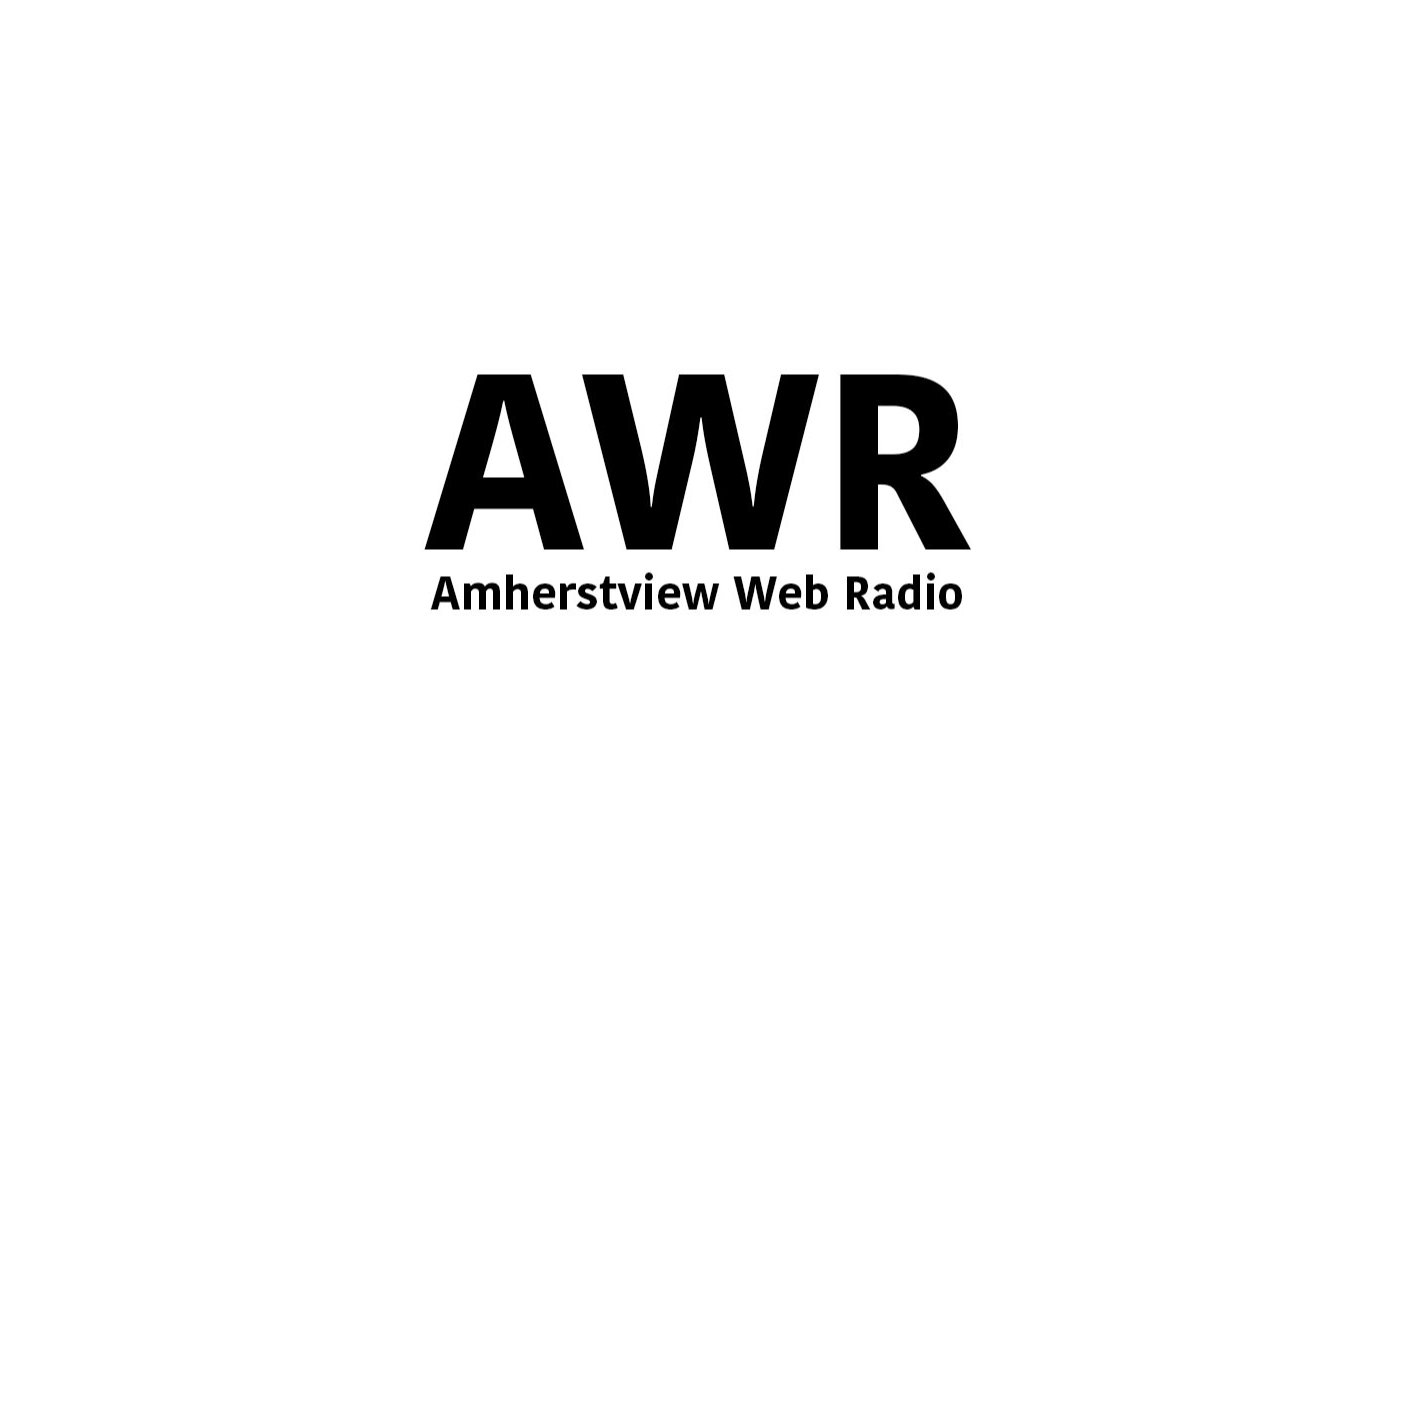 Amherstview Web Radio